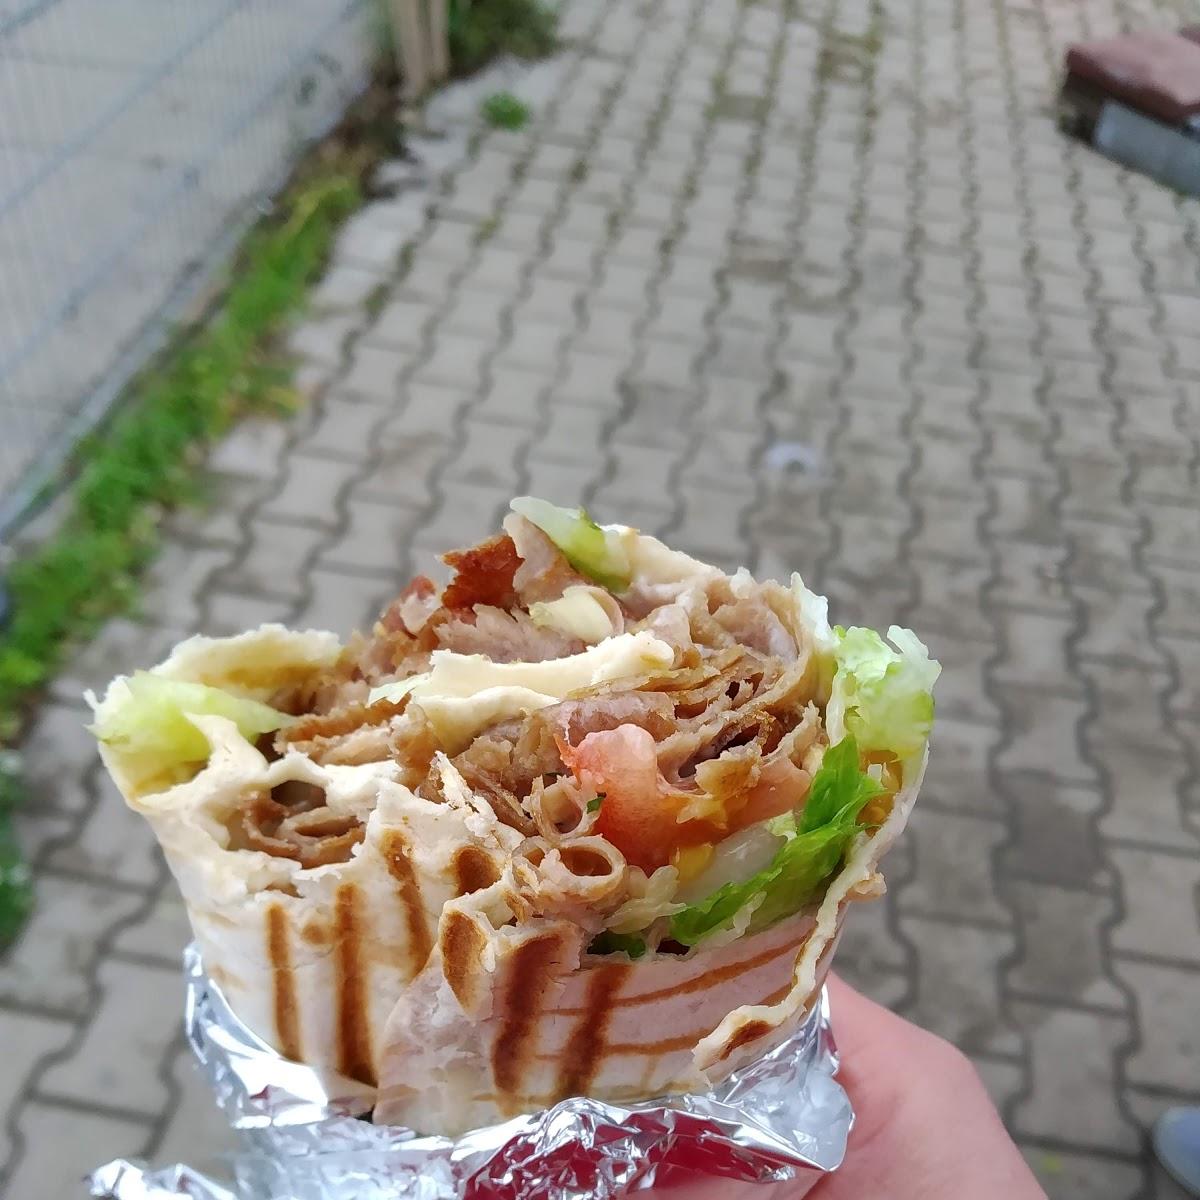 Restaurant "Bistro Jasmin 2 Kebab Döner" in Leipzig